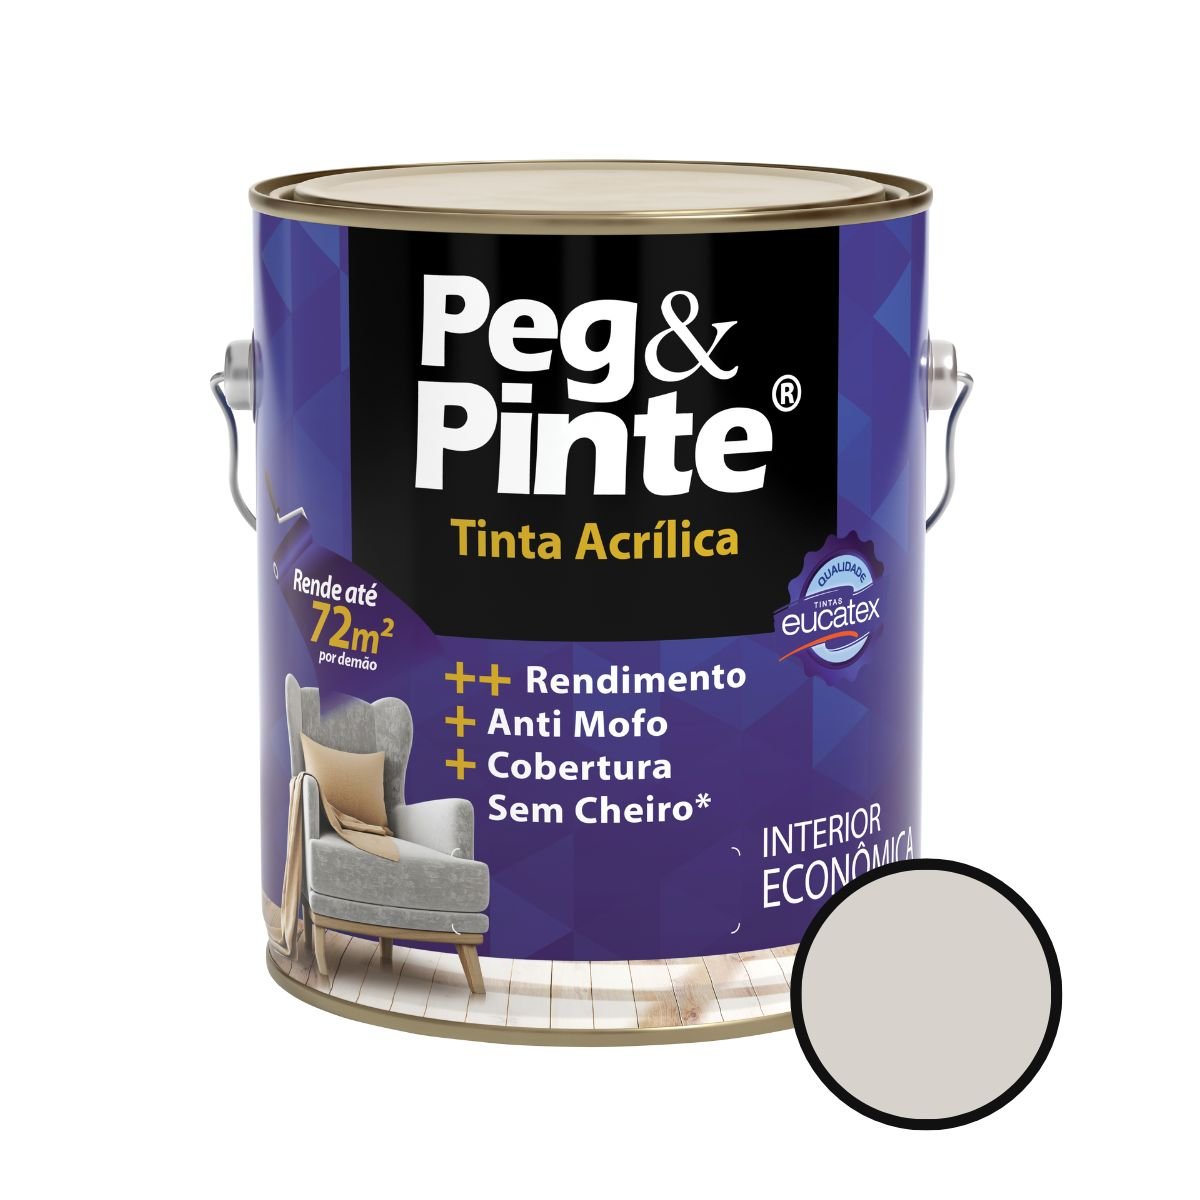 Tinta Peg&pinte Acrilica Gelo Galão 3,6 Litros Eucatex - 1